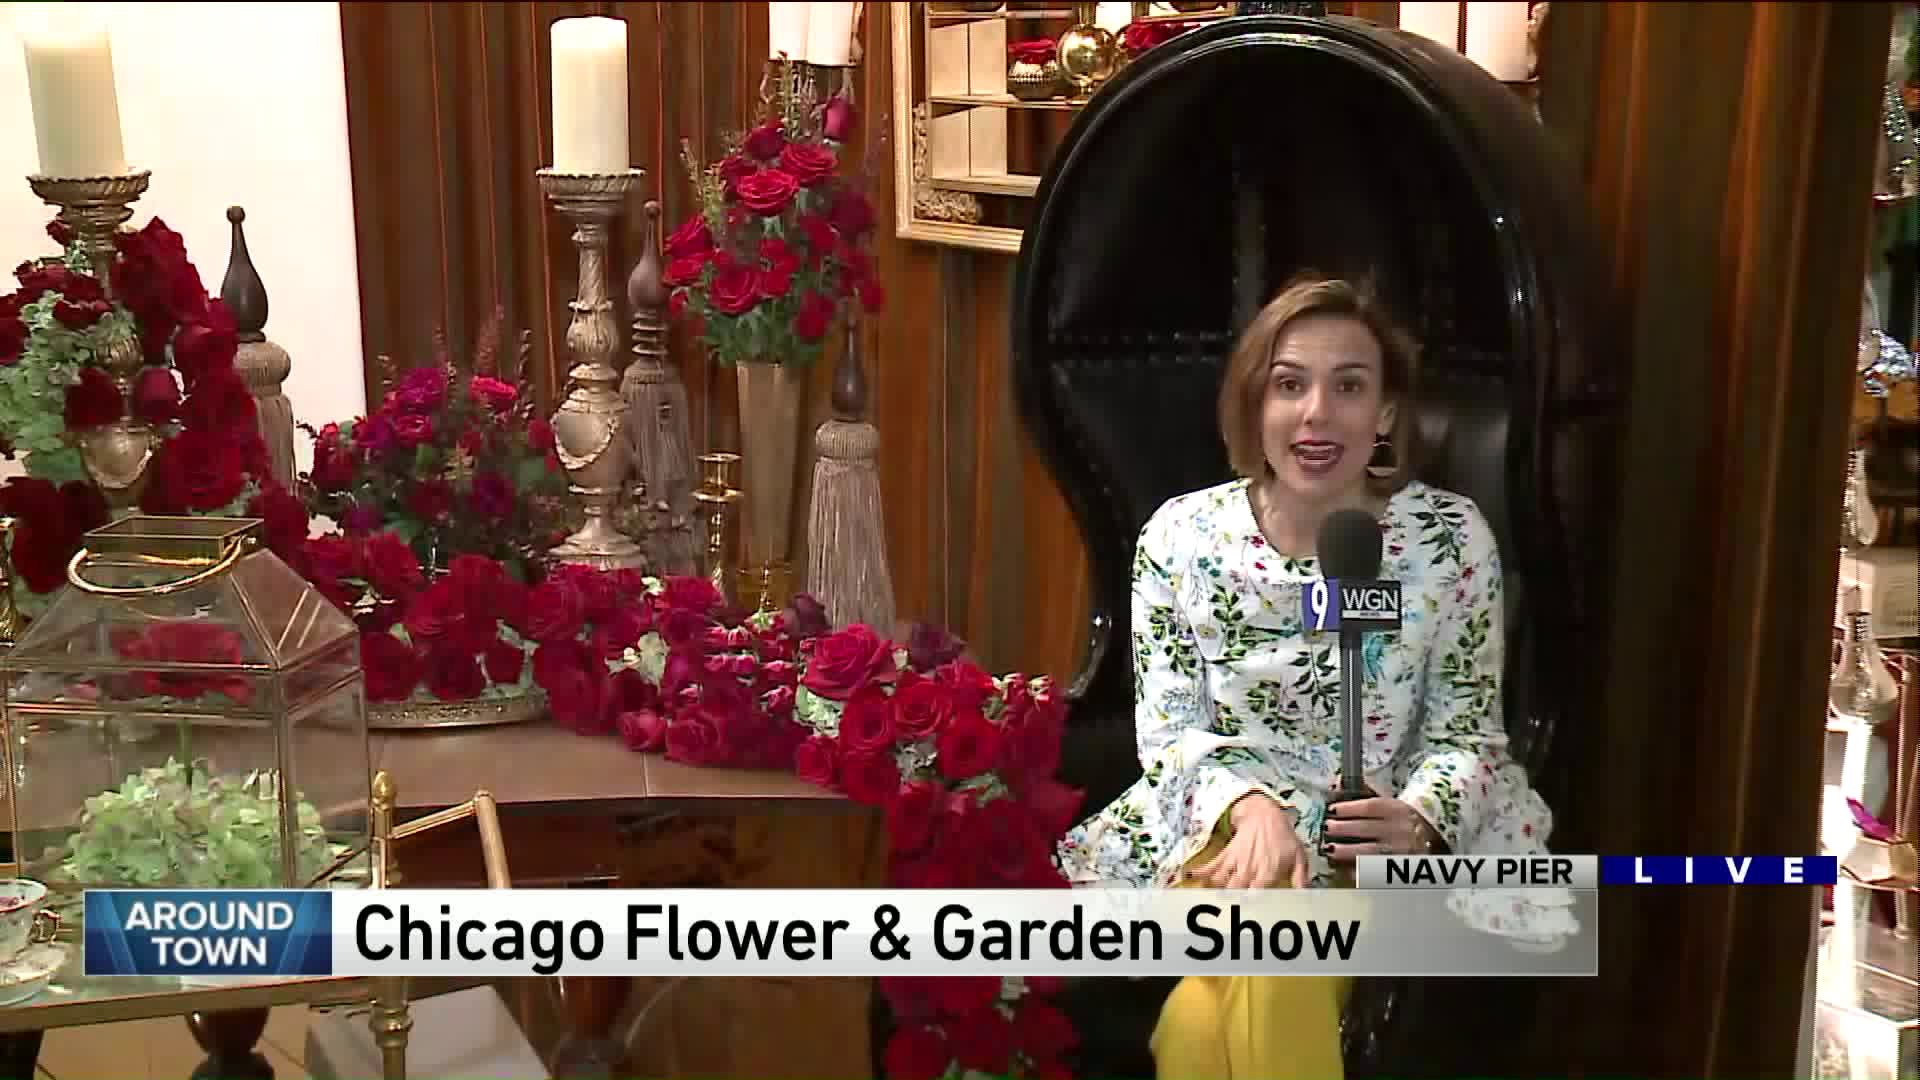 Around Town checks out the Chicago Flower & Garden Show